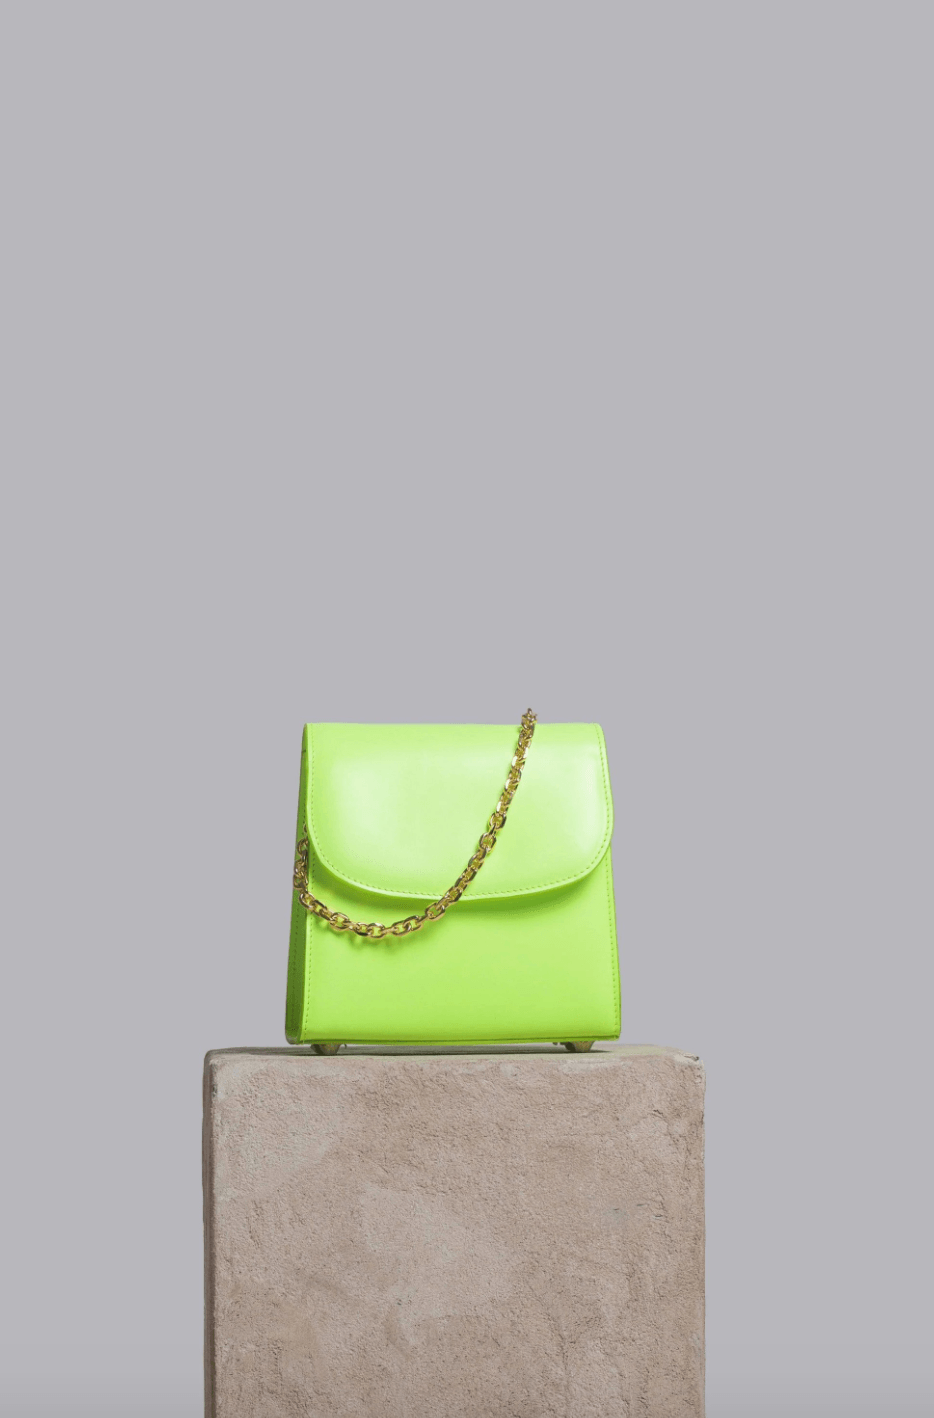 Loop Neon Leather Gold Chain Handbag - Endless